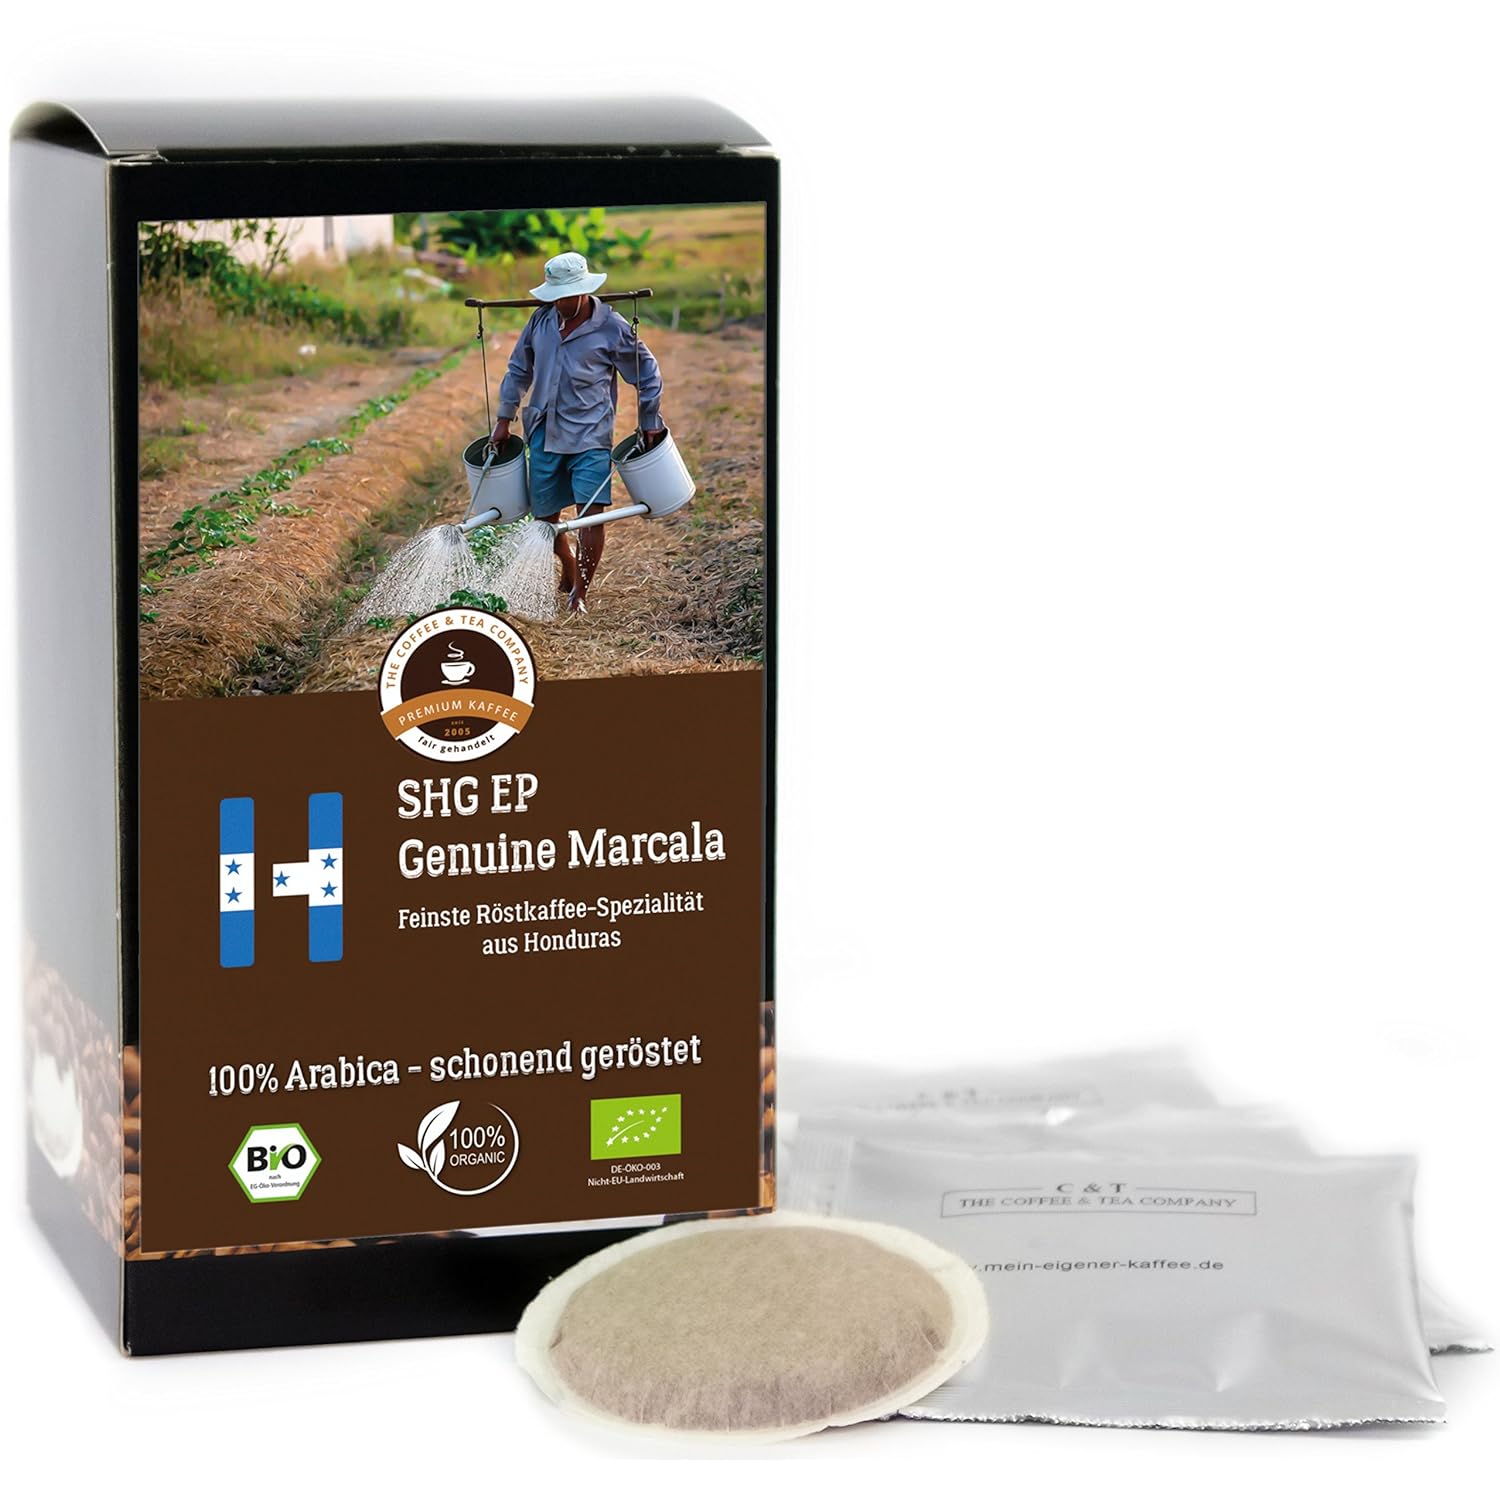 Coffee Globetrotter - Organic Honduras Genuine Marcala - 50 Premium Coffee Pods - for Senseo Coffee Machine - Top Coffee - Roasted Coffee from Organic Cultivation